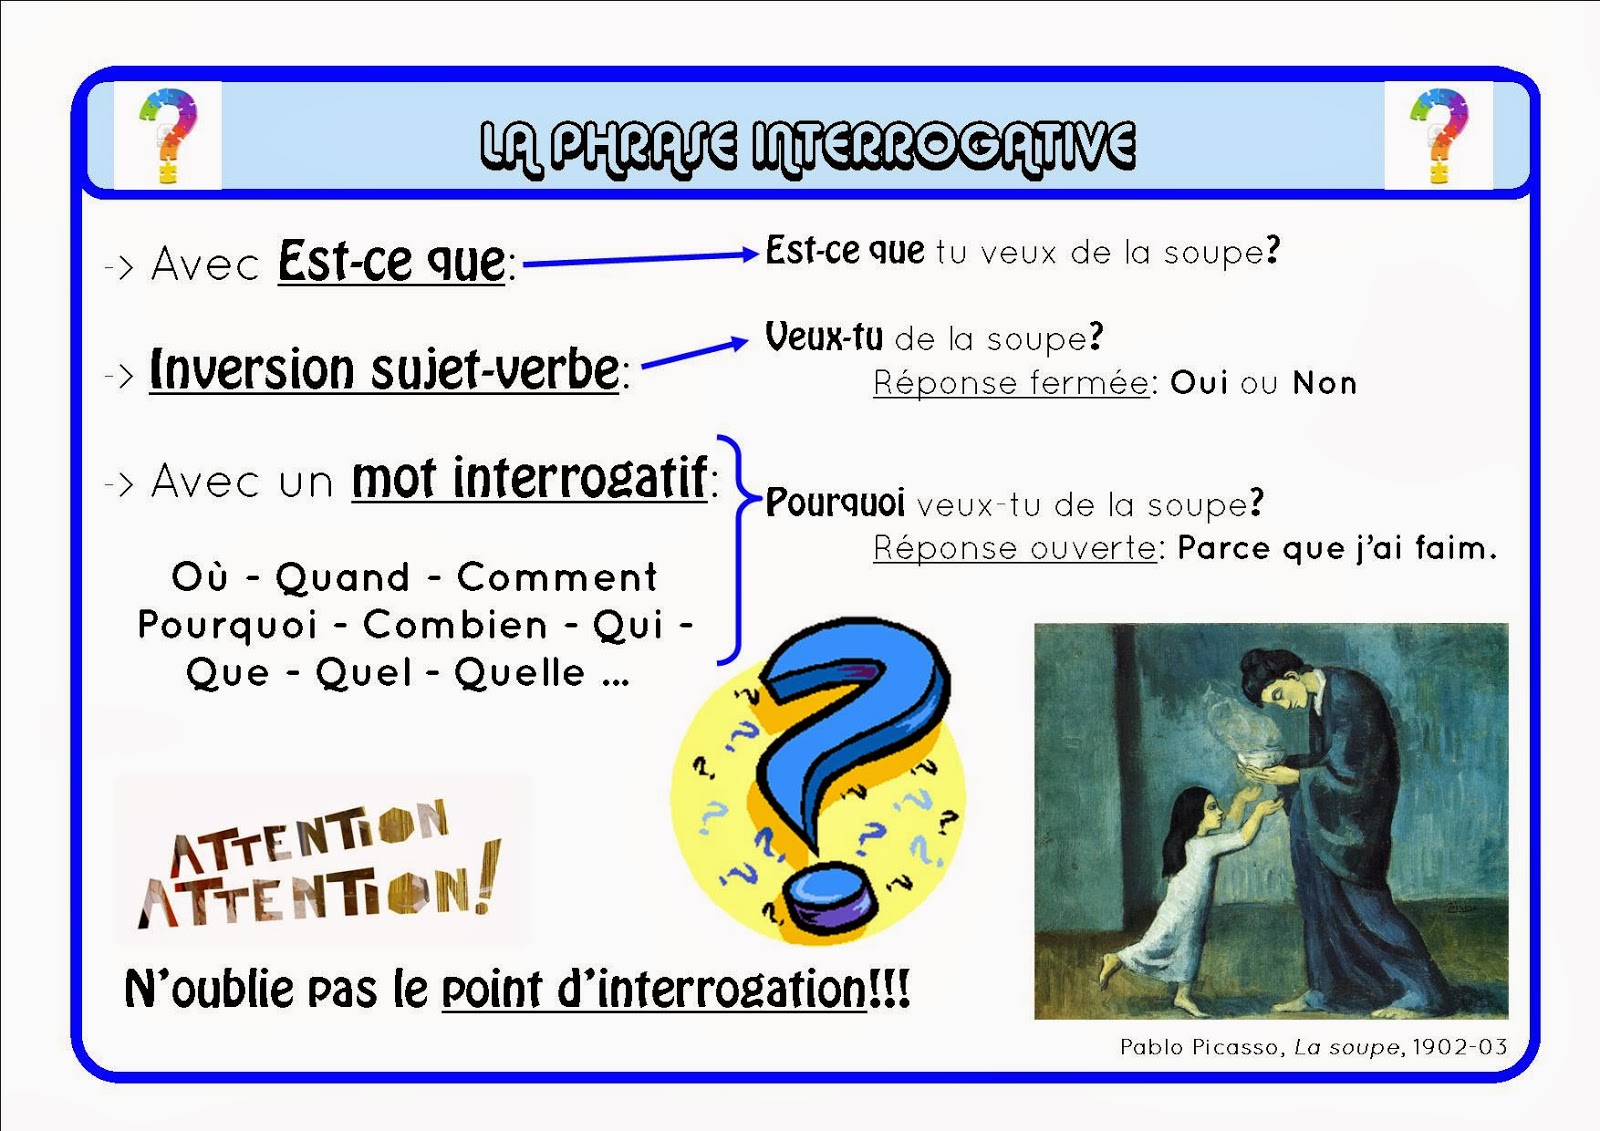 C en est un. Mot interrogatif французски. Phrase interrogative. Est ce que вопросы на французском. La phrase interrogative.